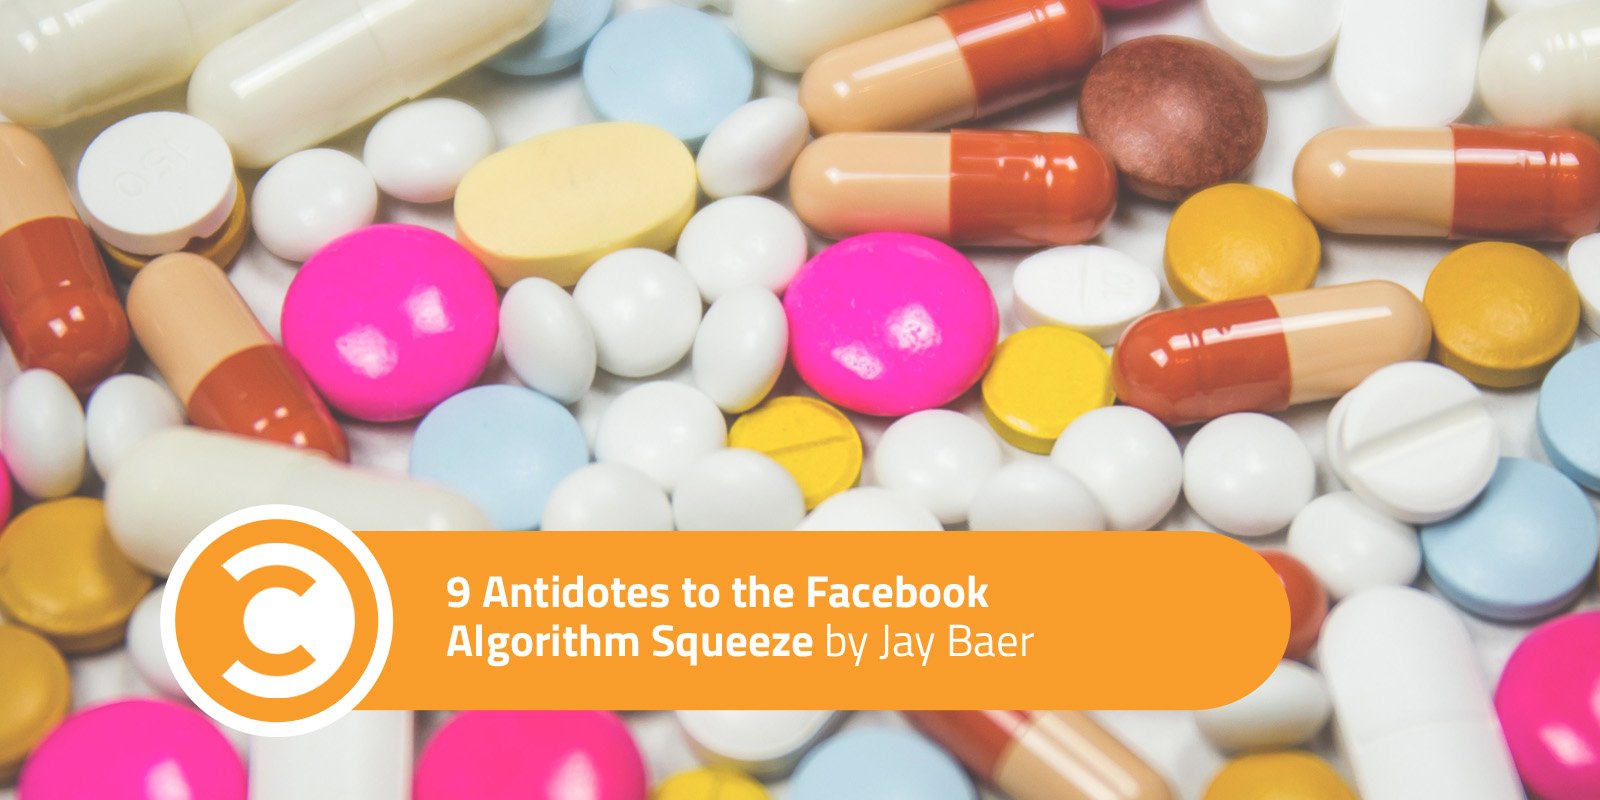 9 Antidotes to the Facebook Algorithm Squeeze